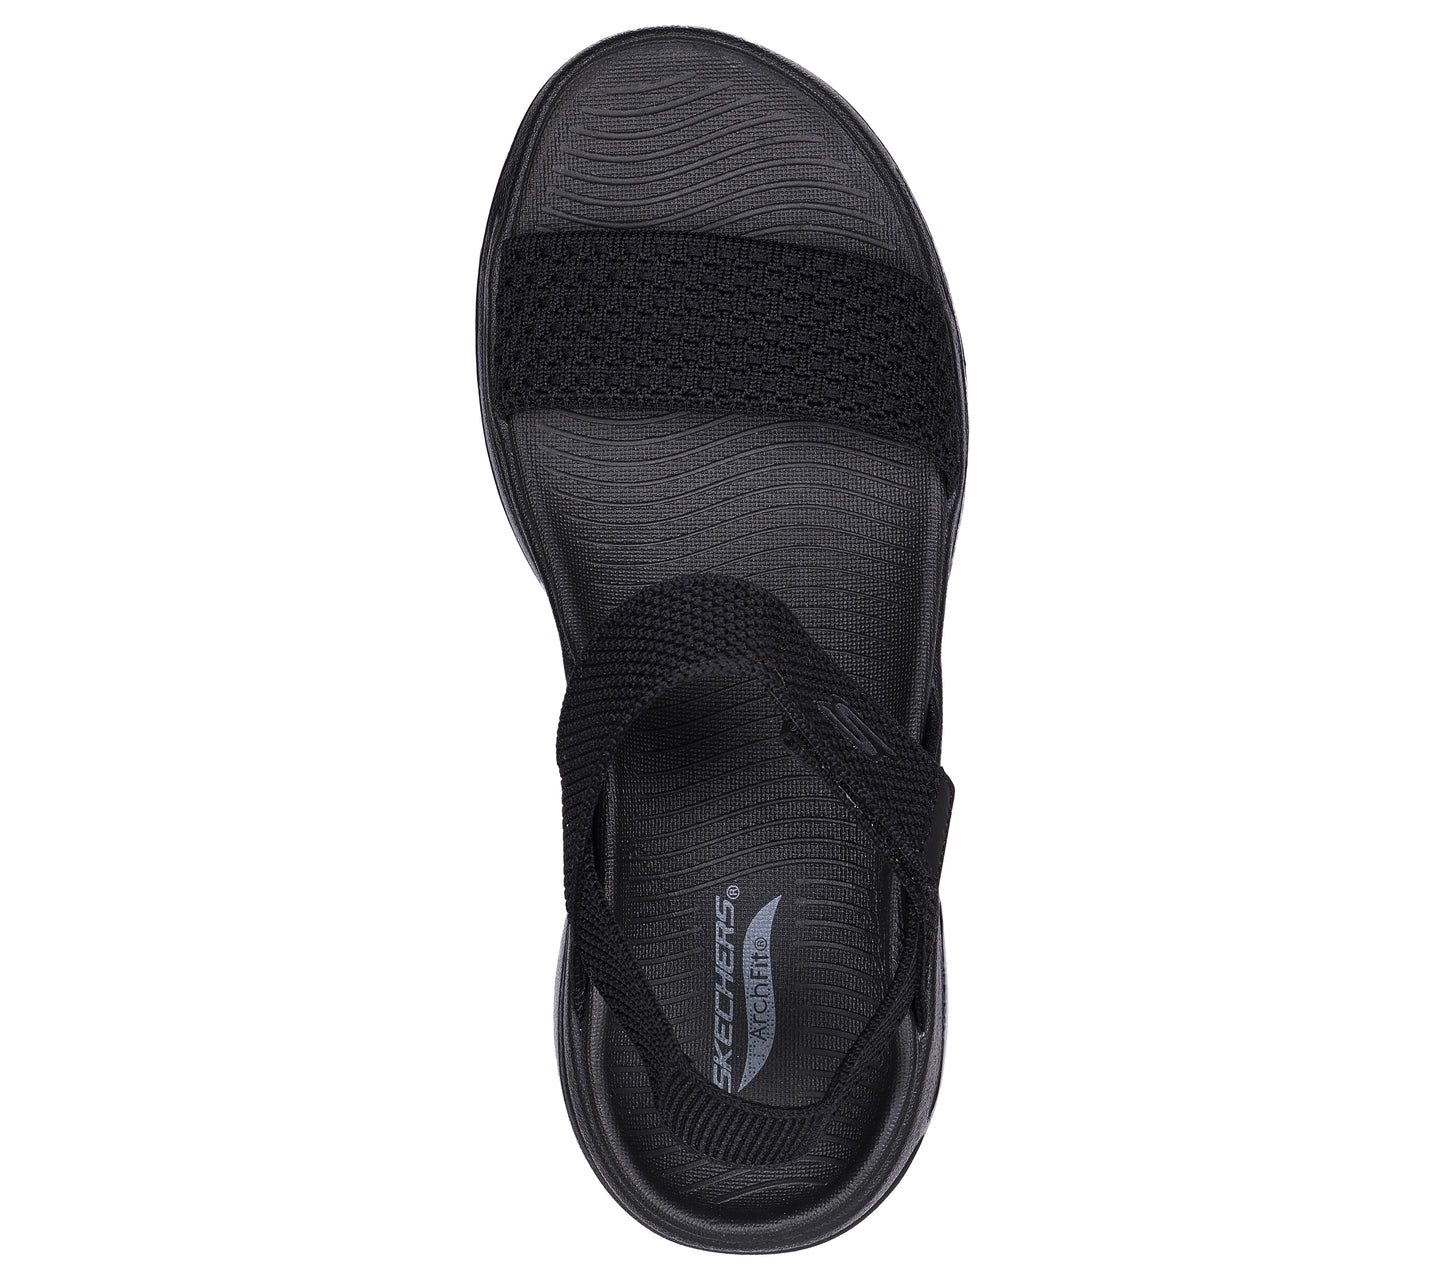 Sandale Skechers Go Walk Arch Fit - Polished